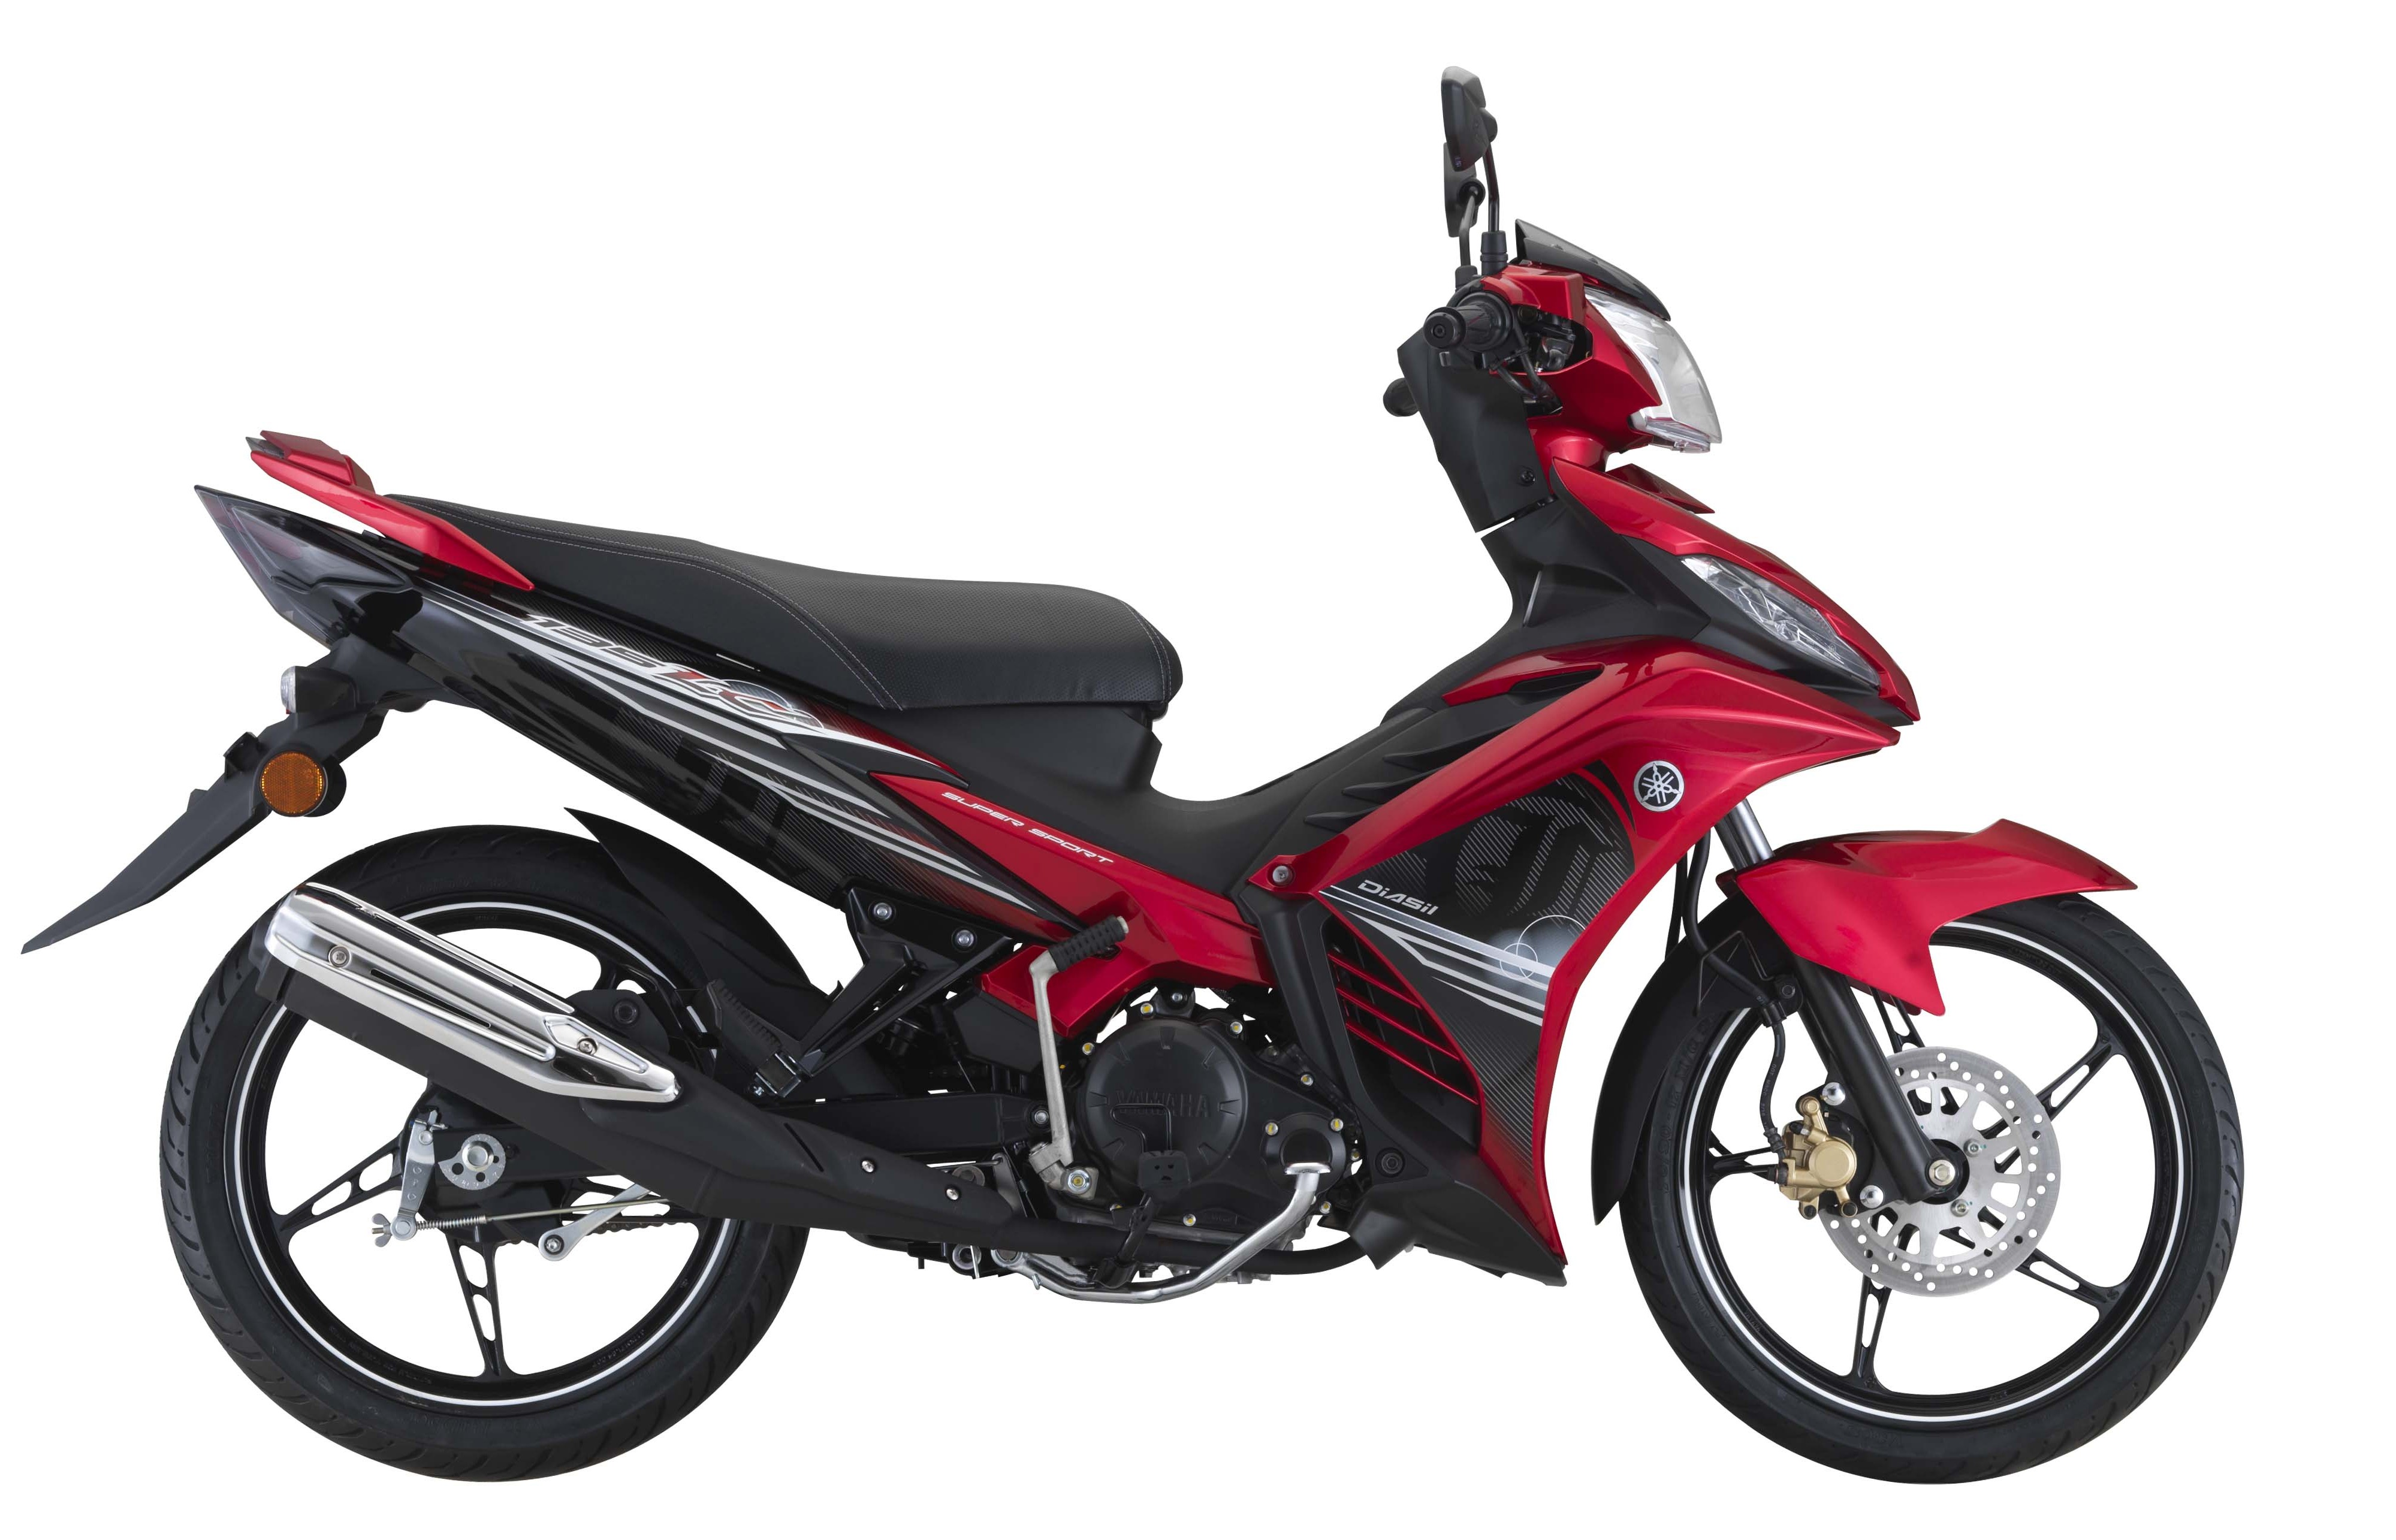 2016 Yamaha 135LC price confirmed, up to RM7,068 2016 Yamaha LC135